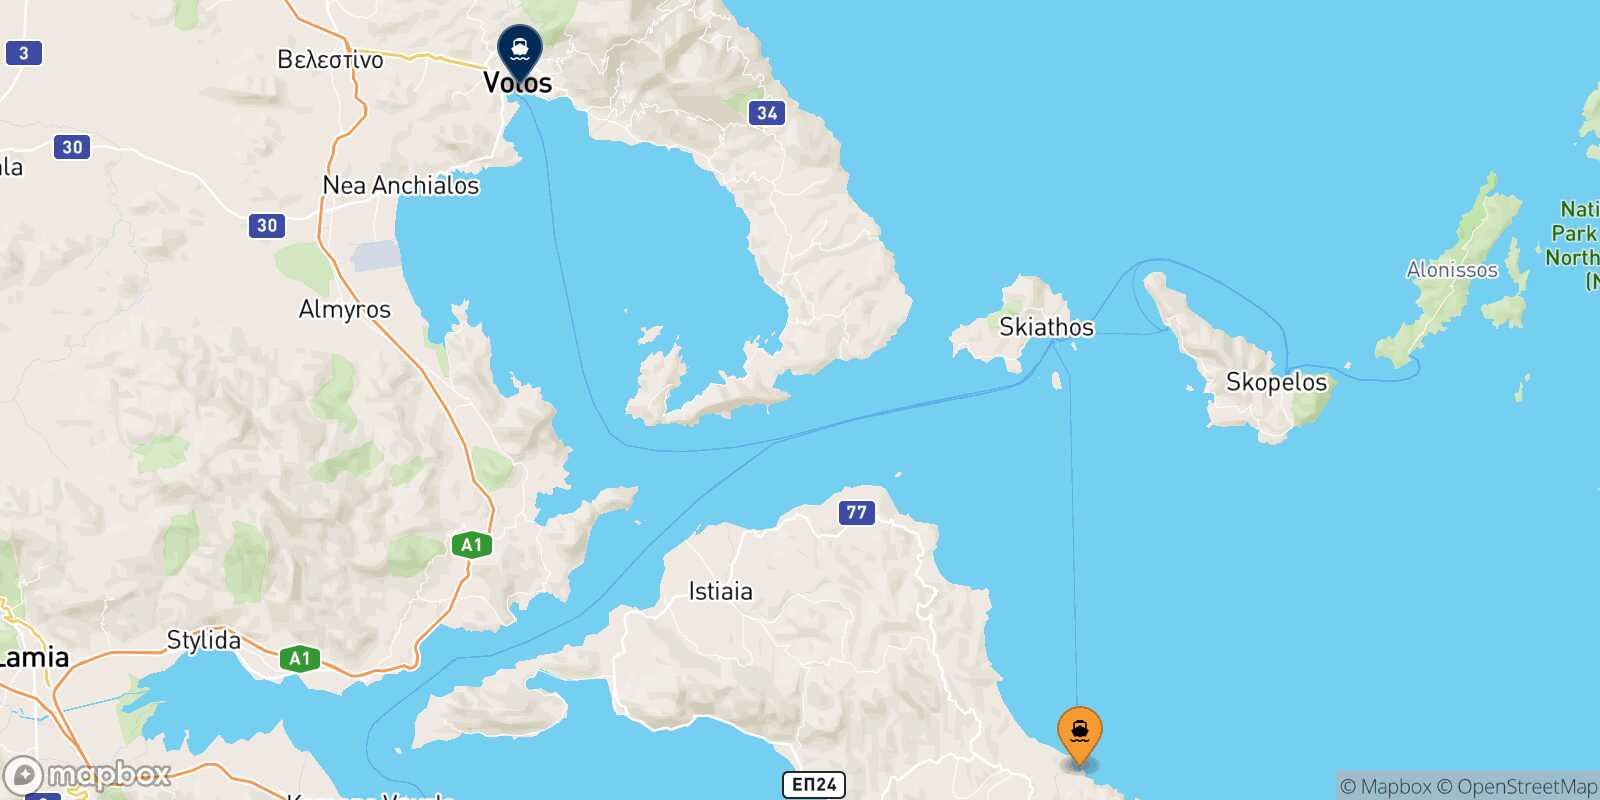 Mantoudi (Evia) Volos route map